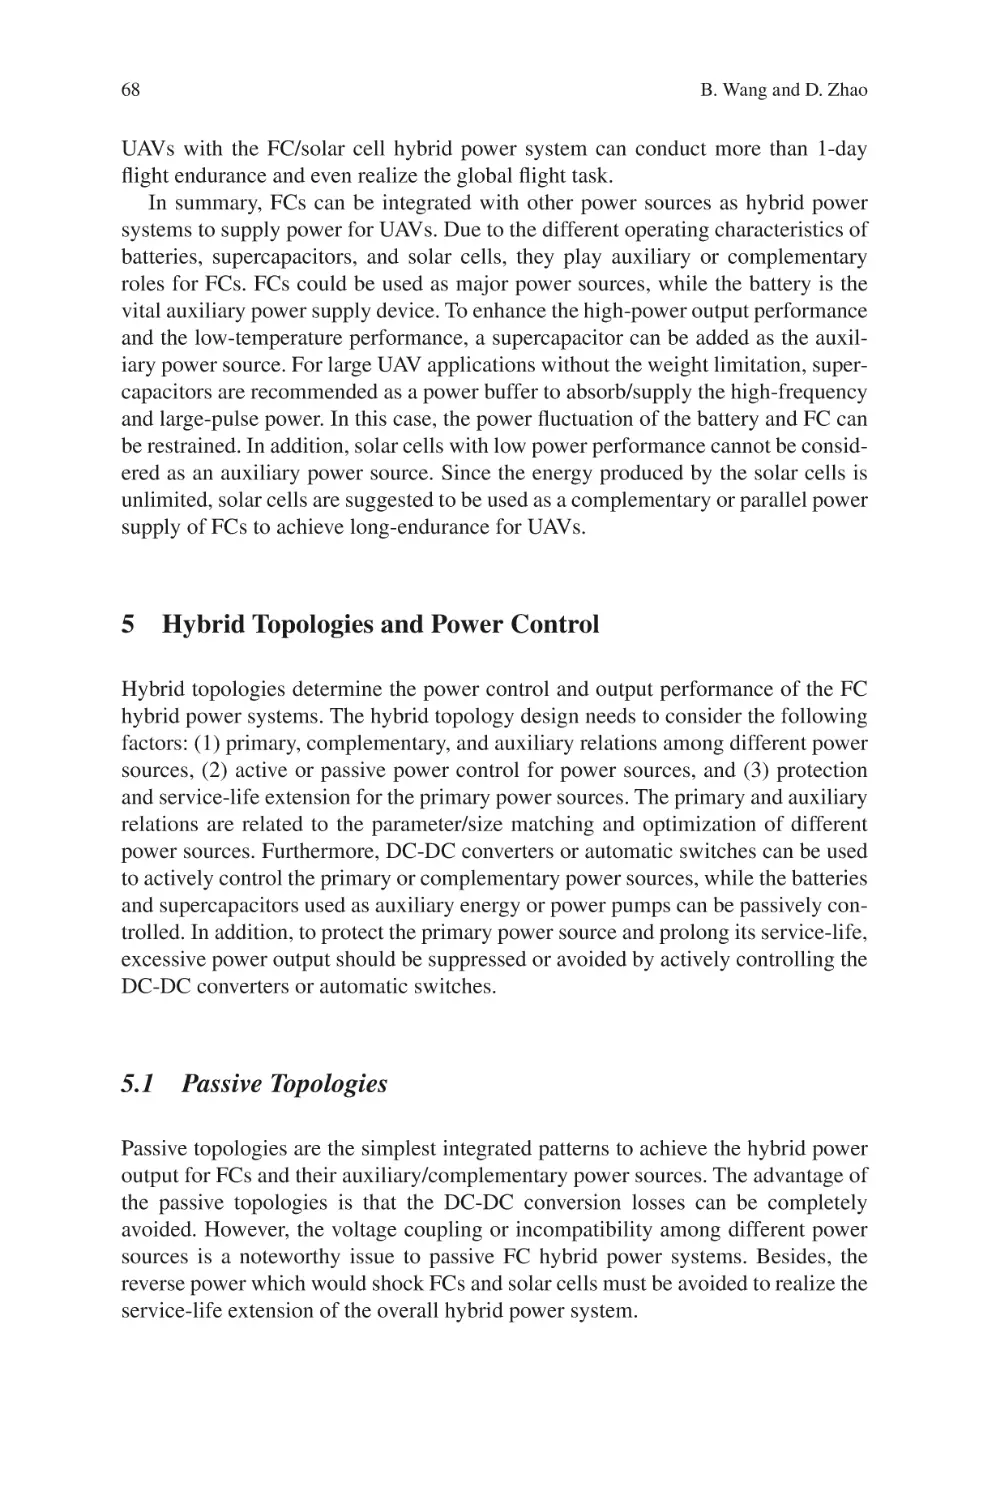 5 Hybrid Topologies and Power Control
5.1 Passive Topologies